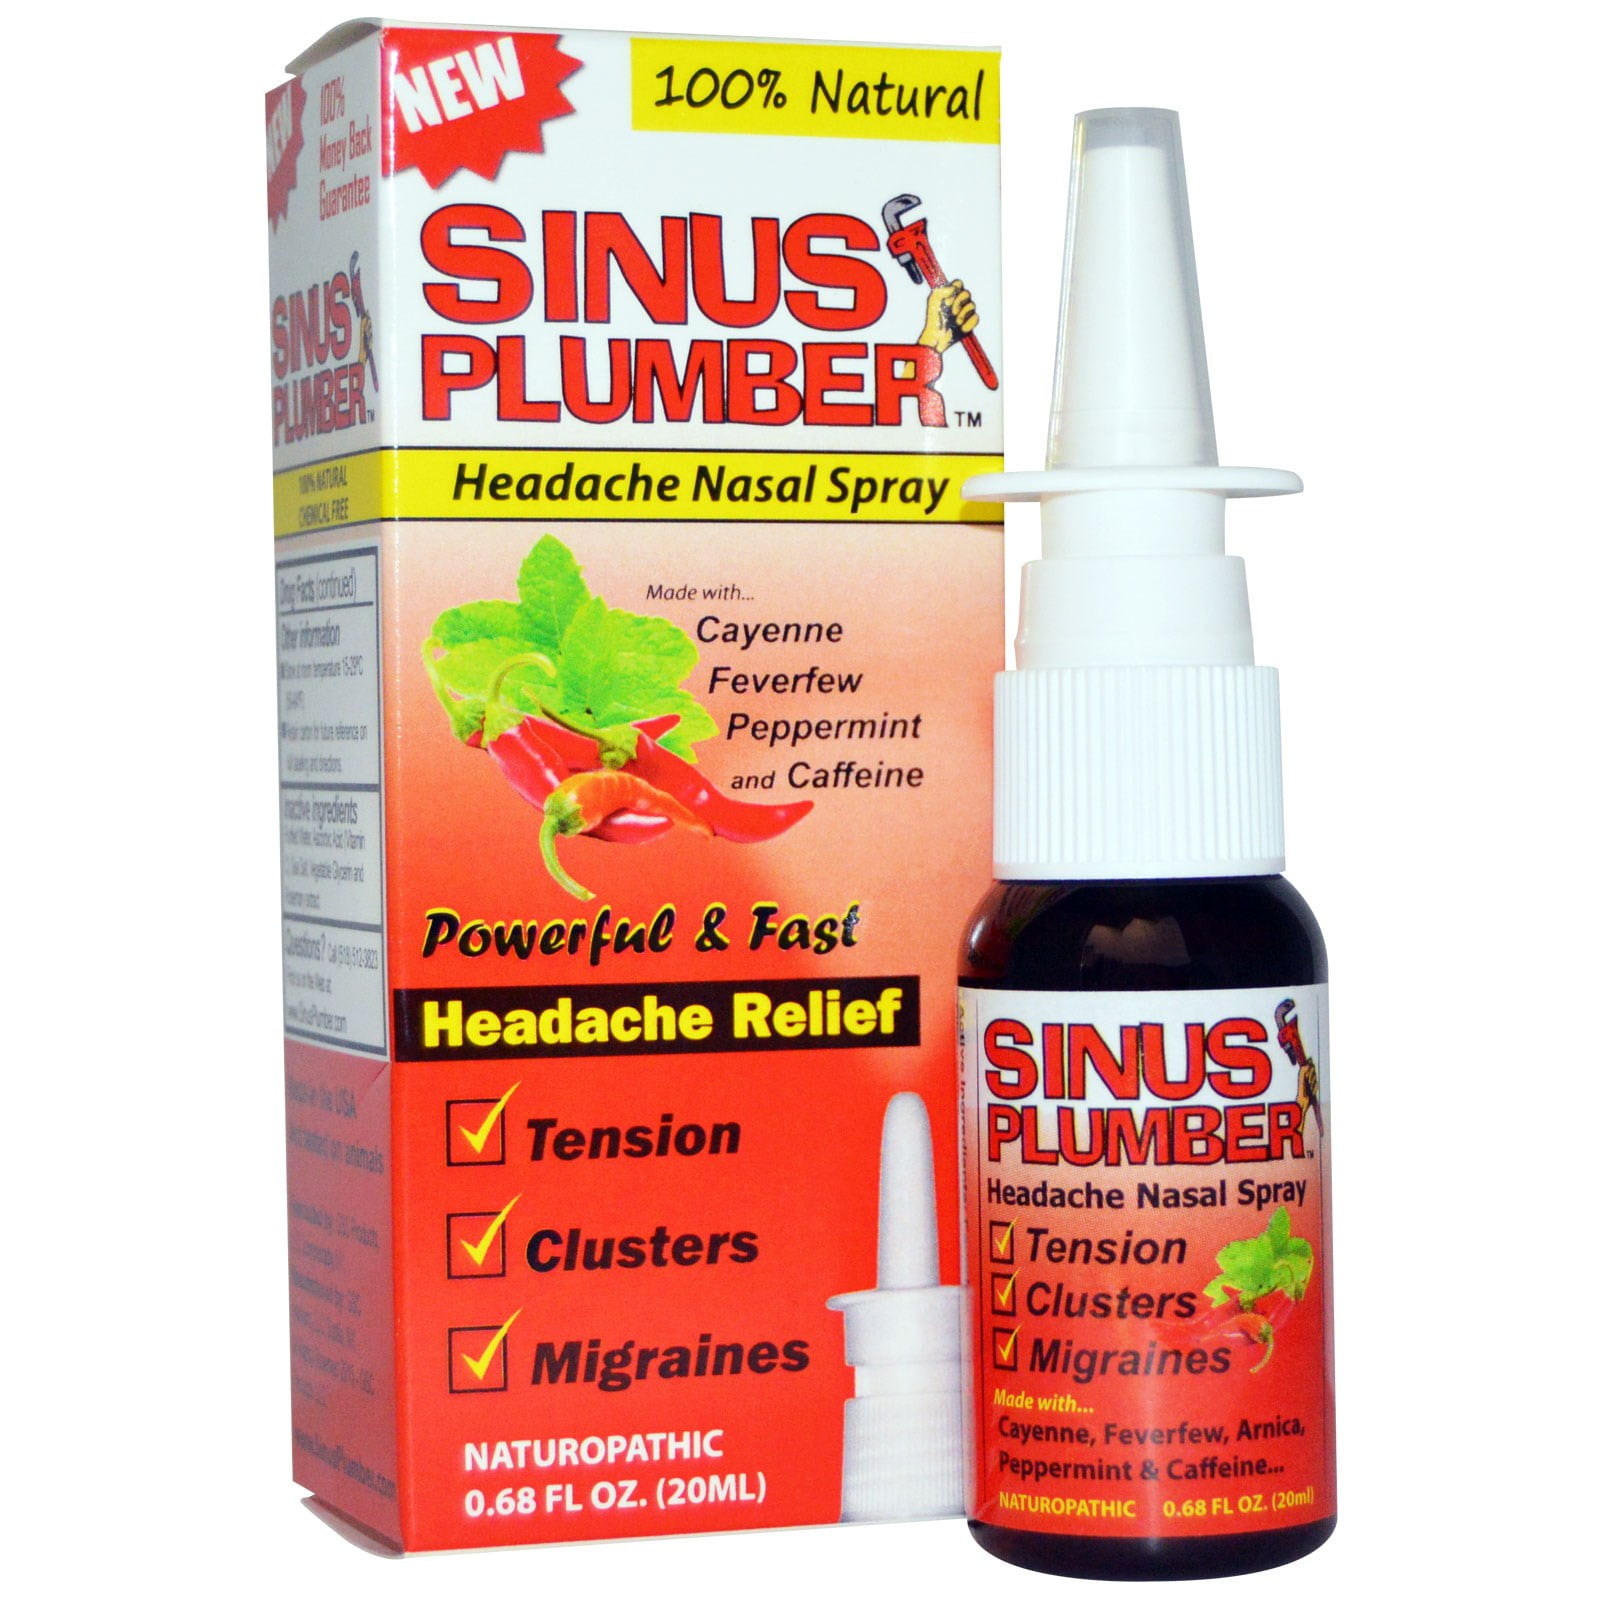 nasal spray for headaches